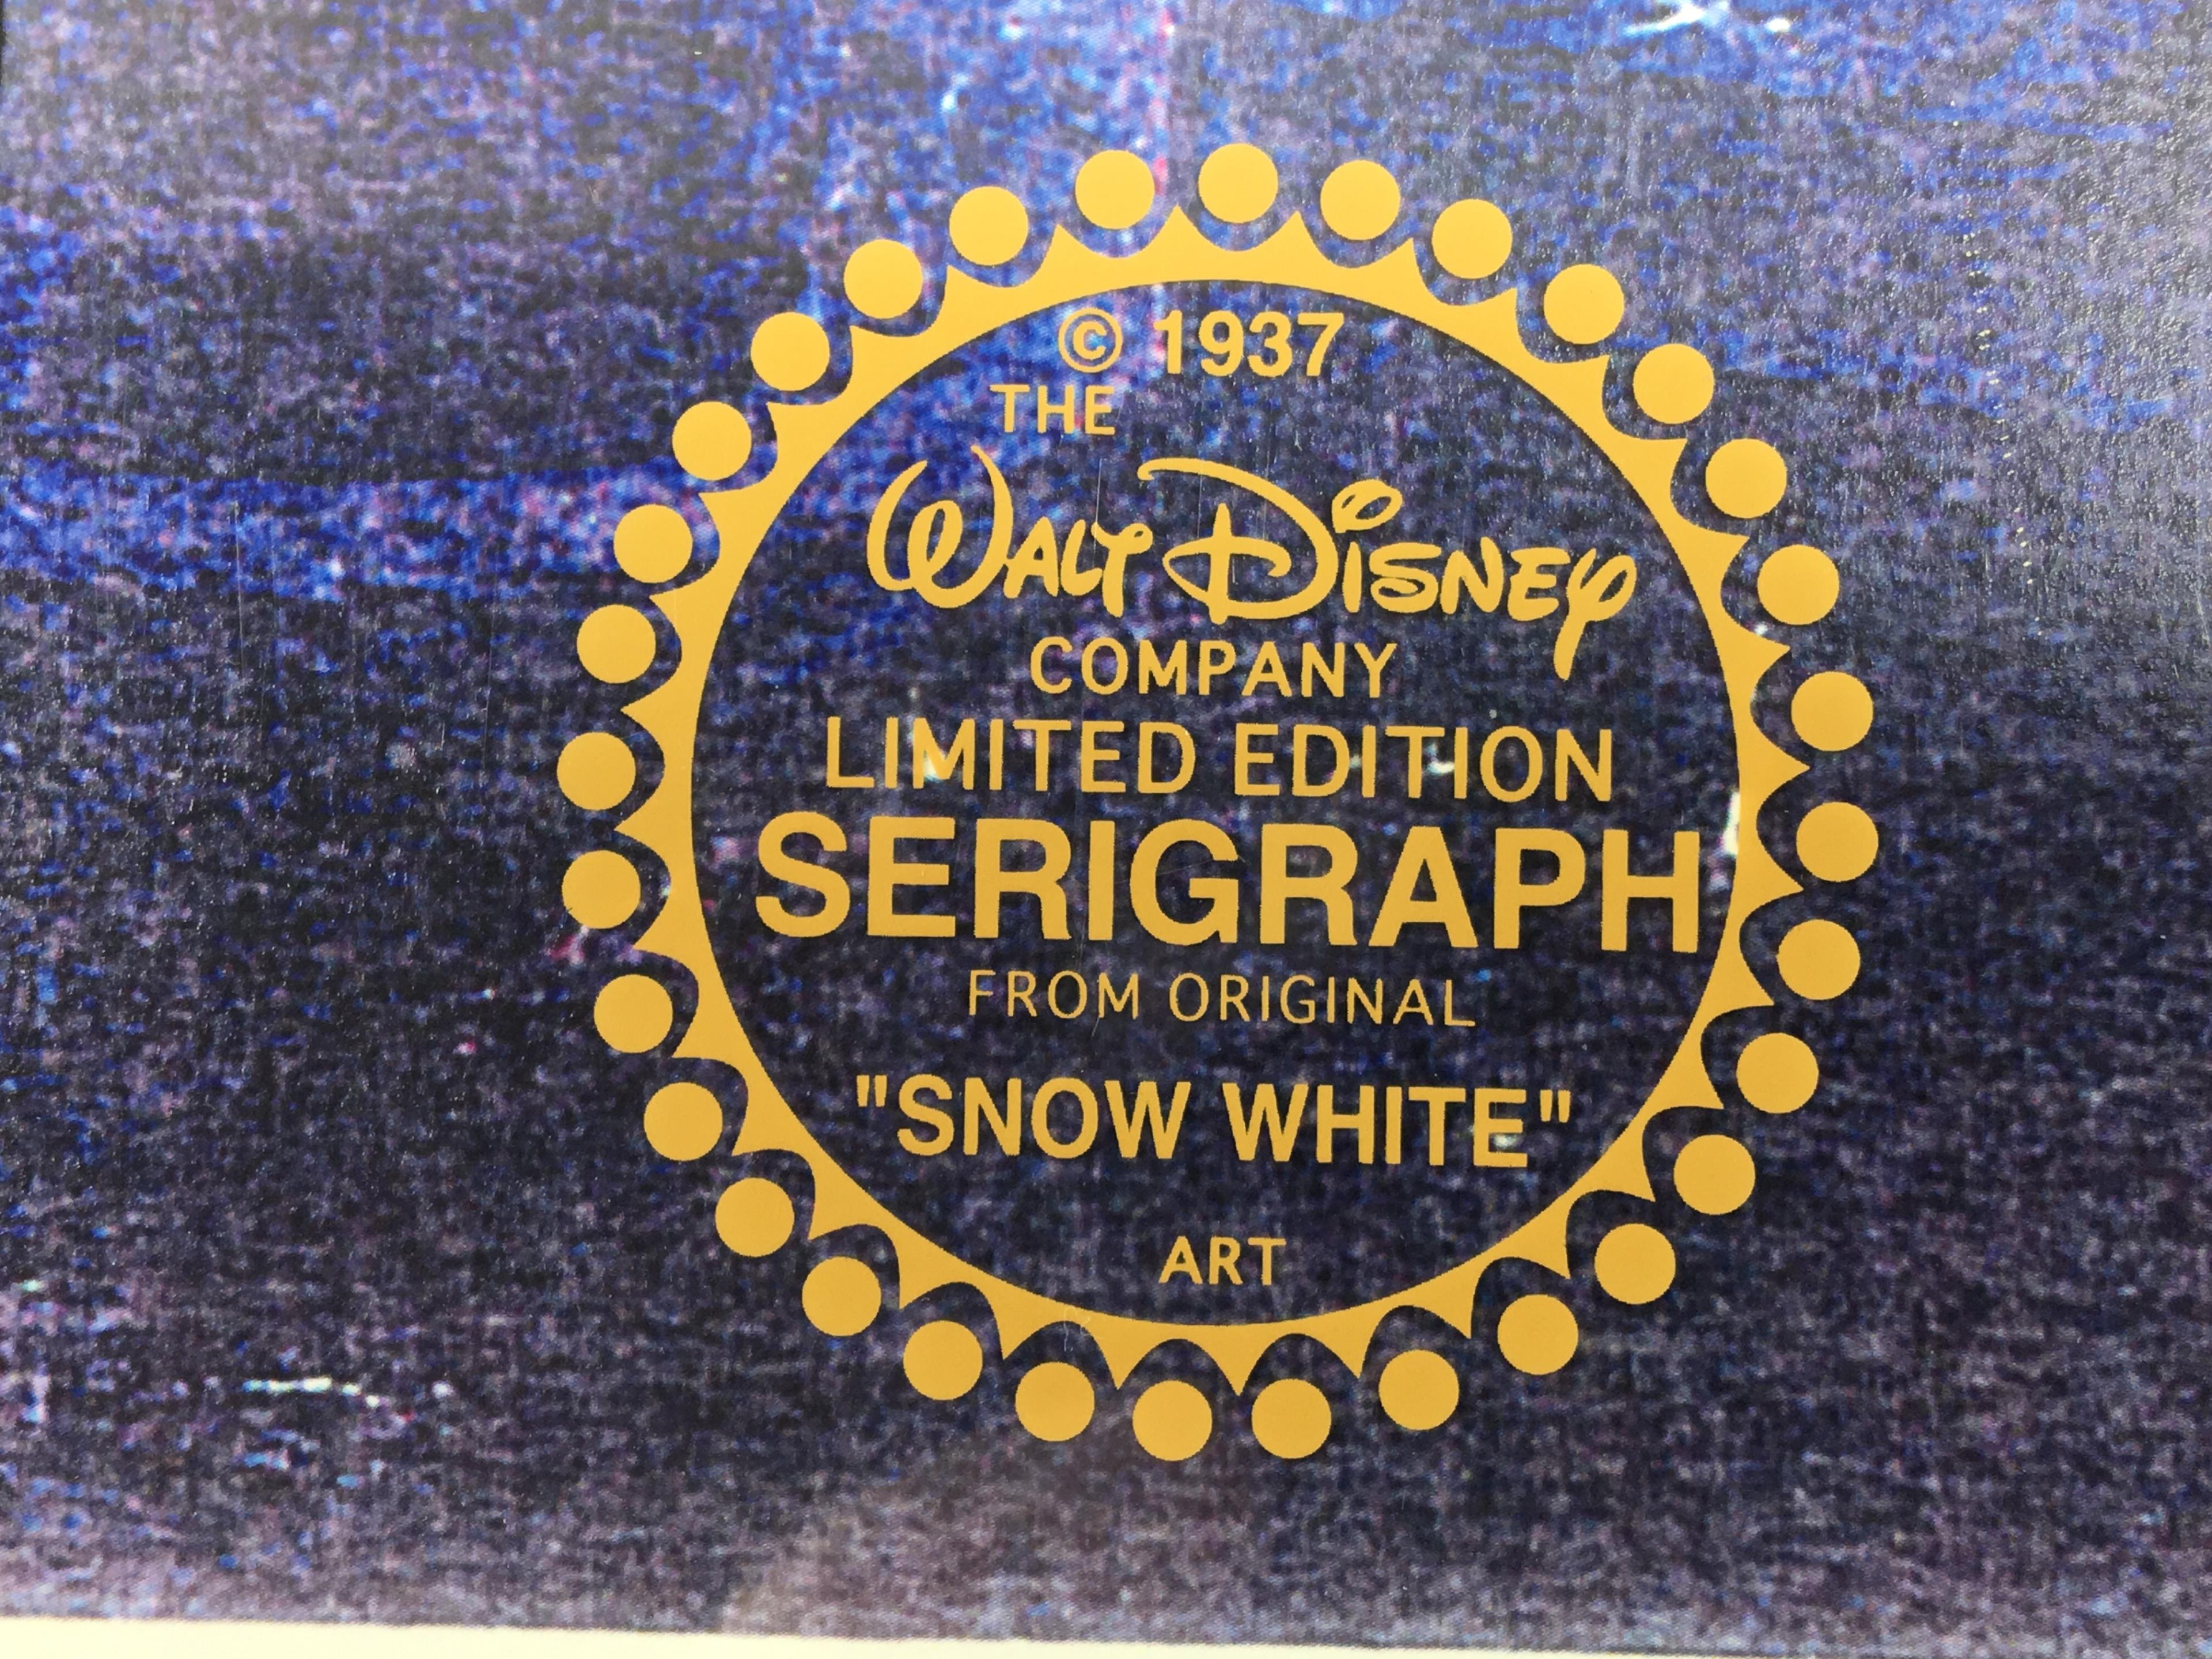 Disney’s Snow White Limited Edition Sericel